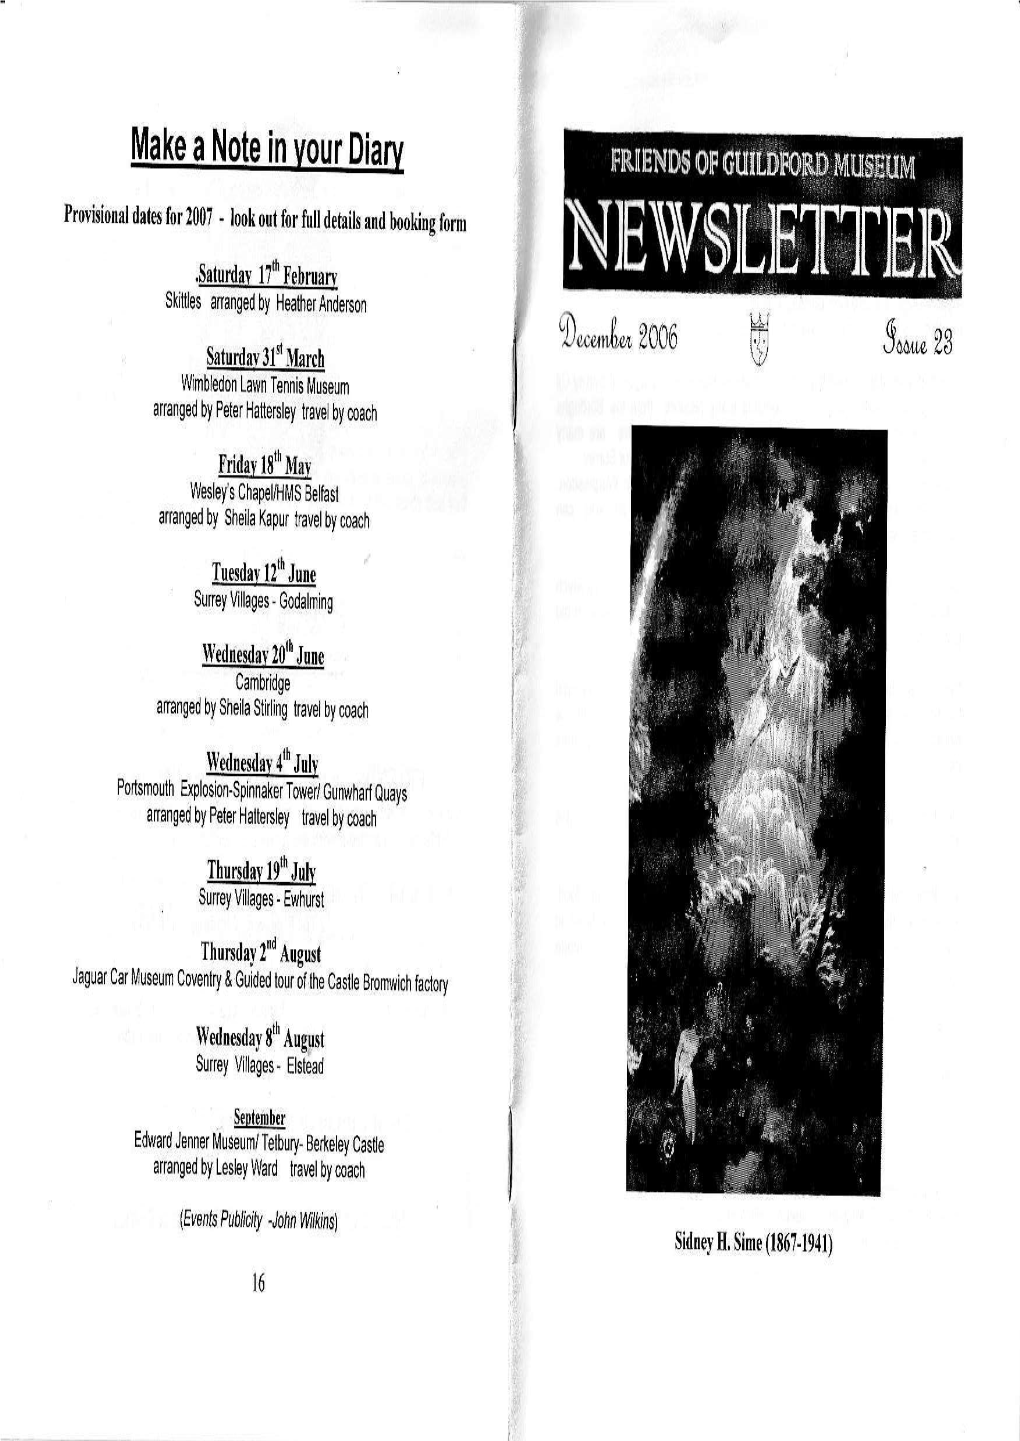 Issue 23 December 2006